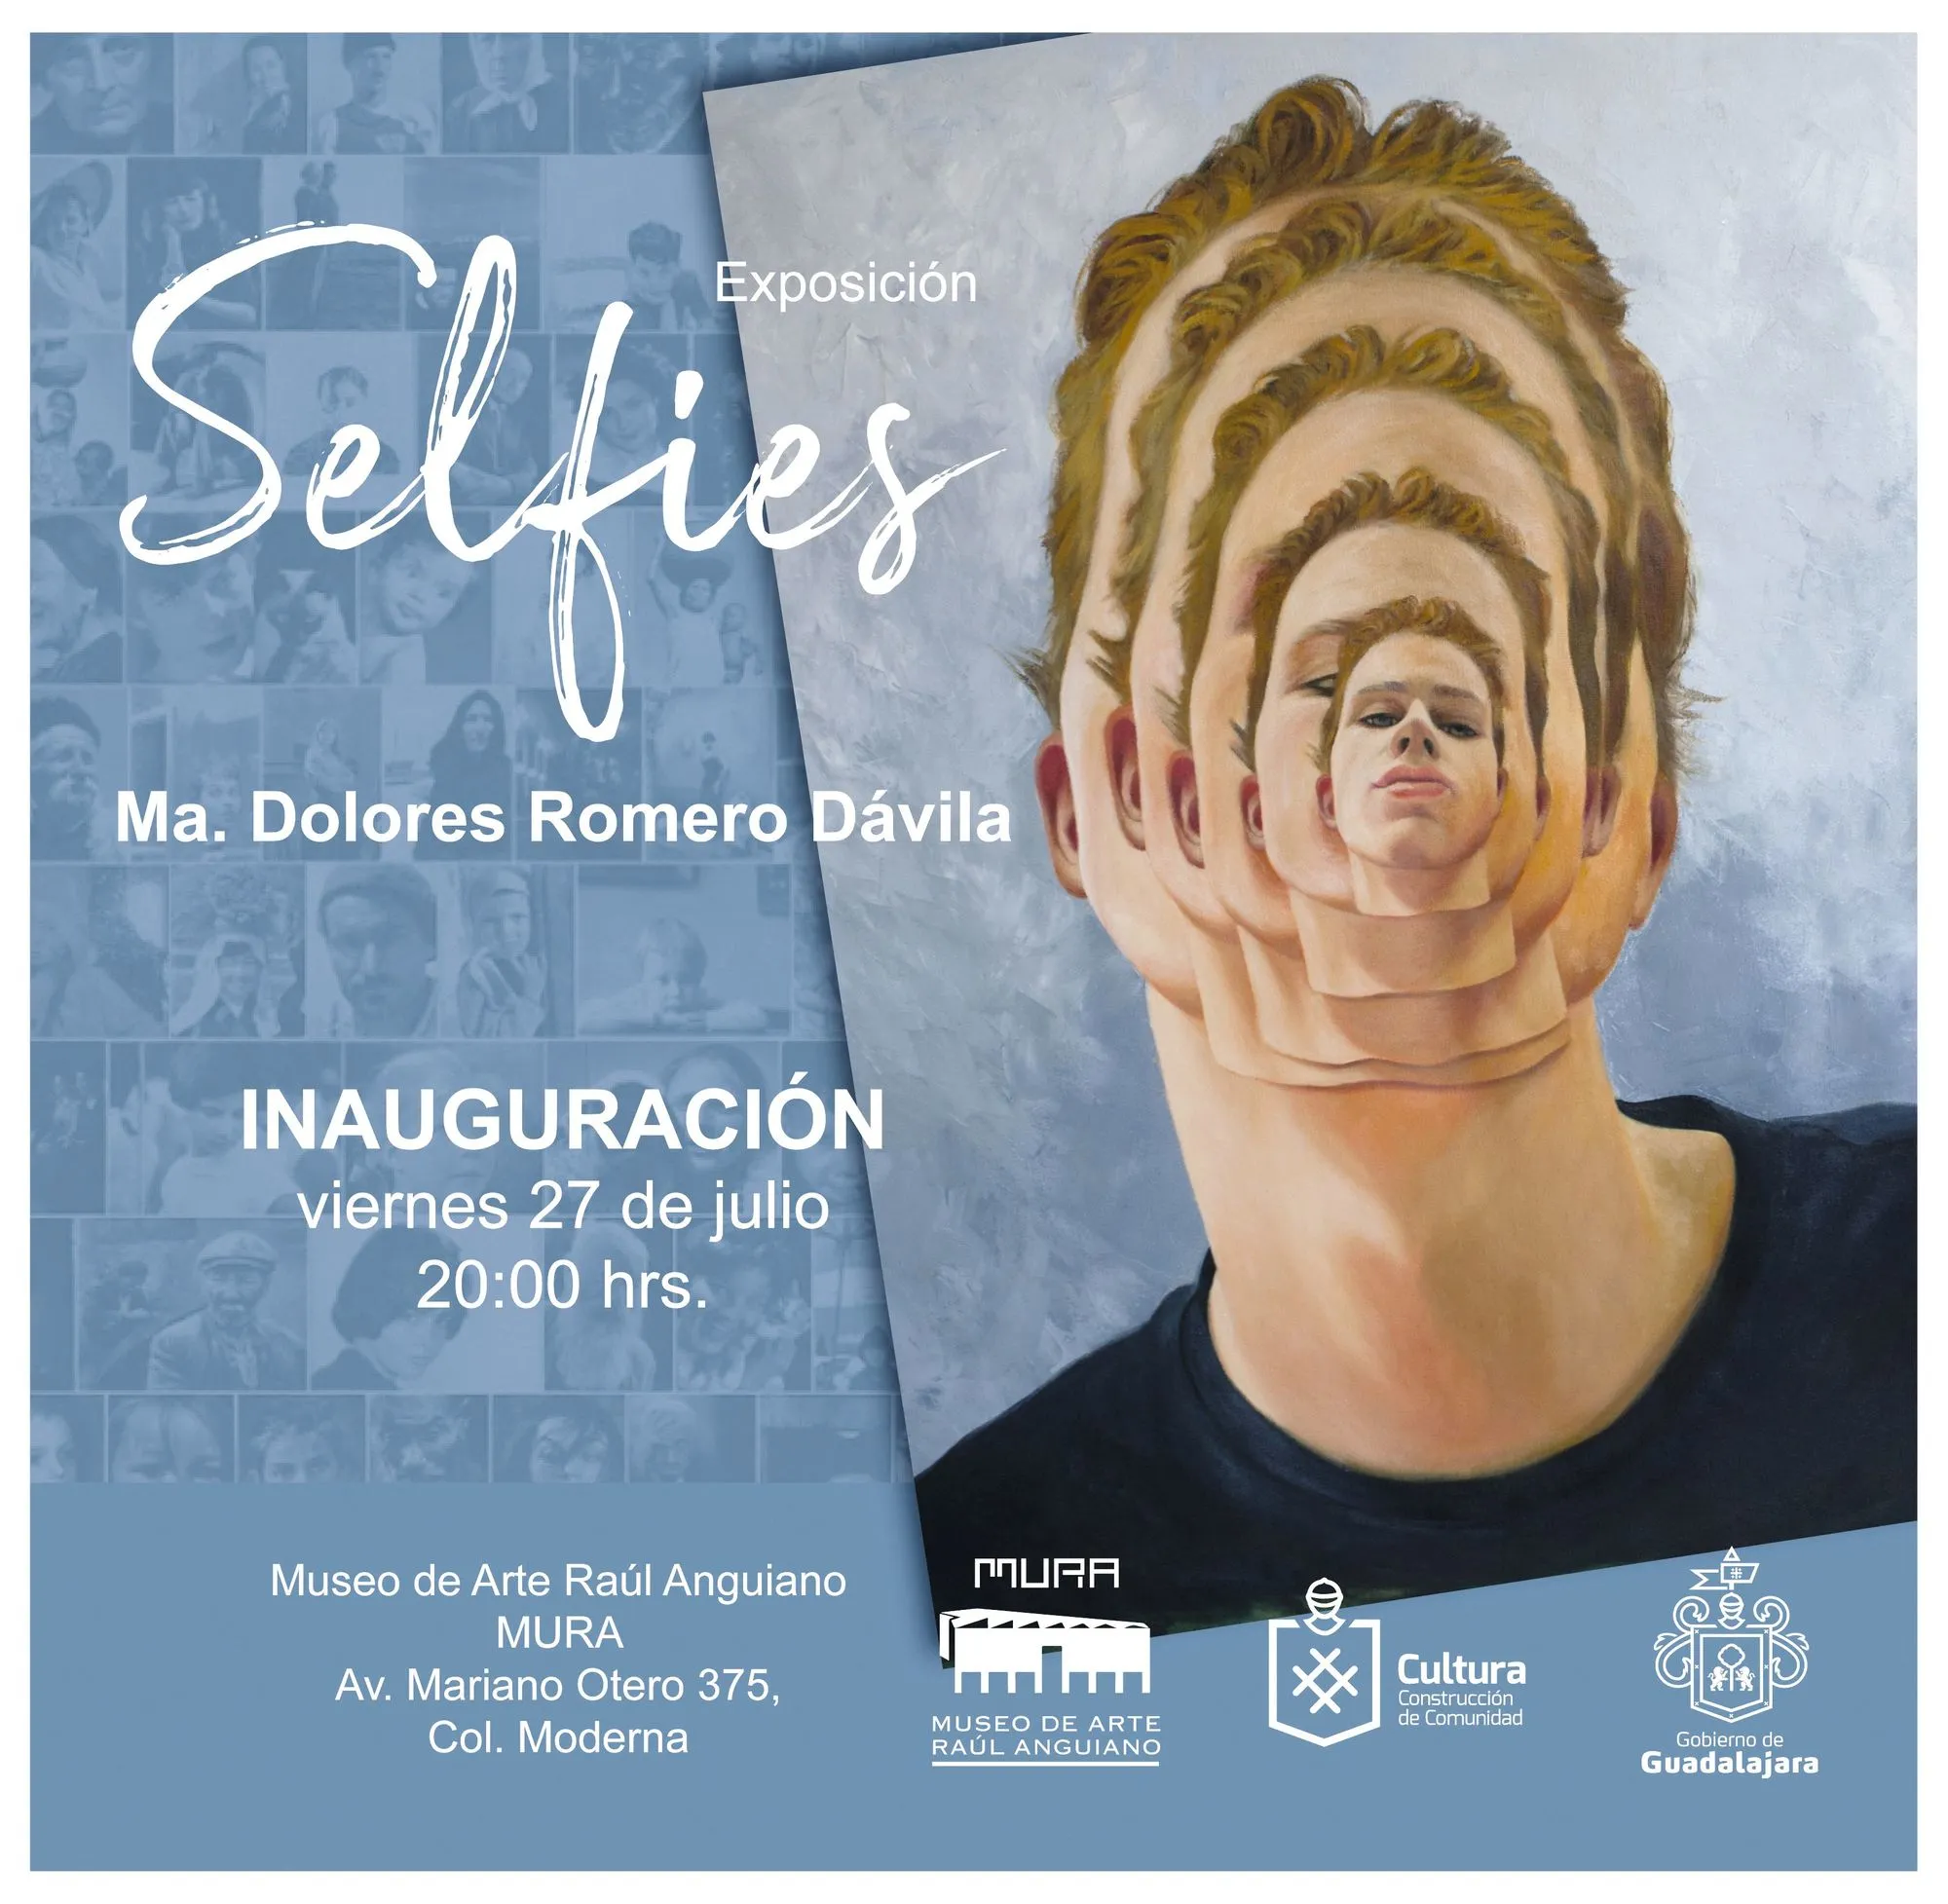 Ma. Dolores Romero Dávila, Selfie, óleo sobre tela, 2018.